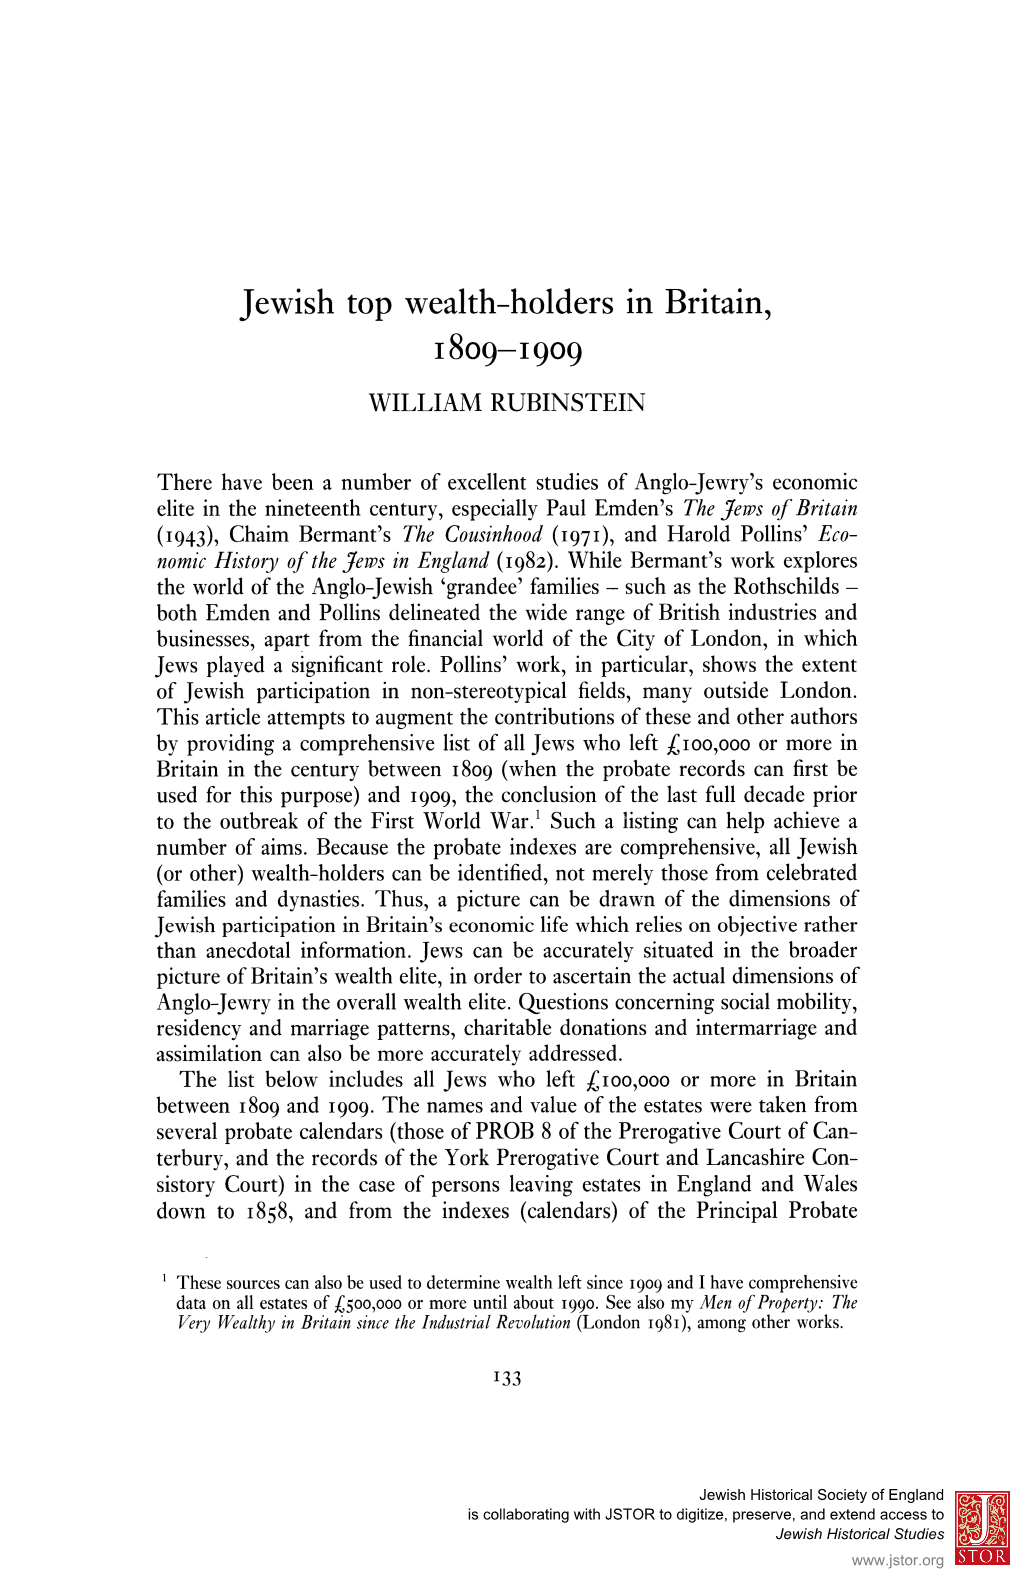 Jewish Top Wealth—Holders in Britain, 1809—1909